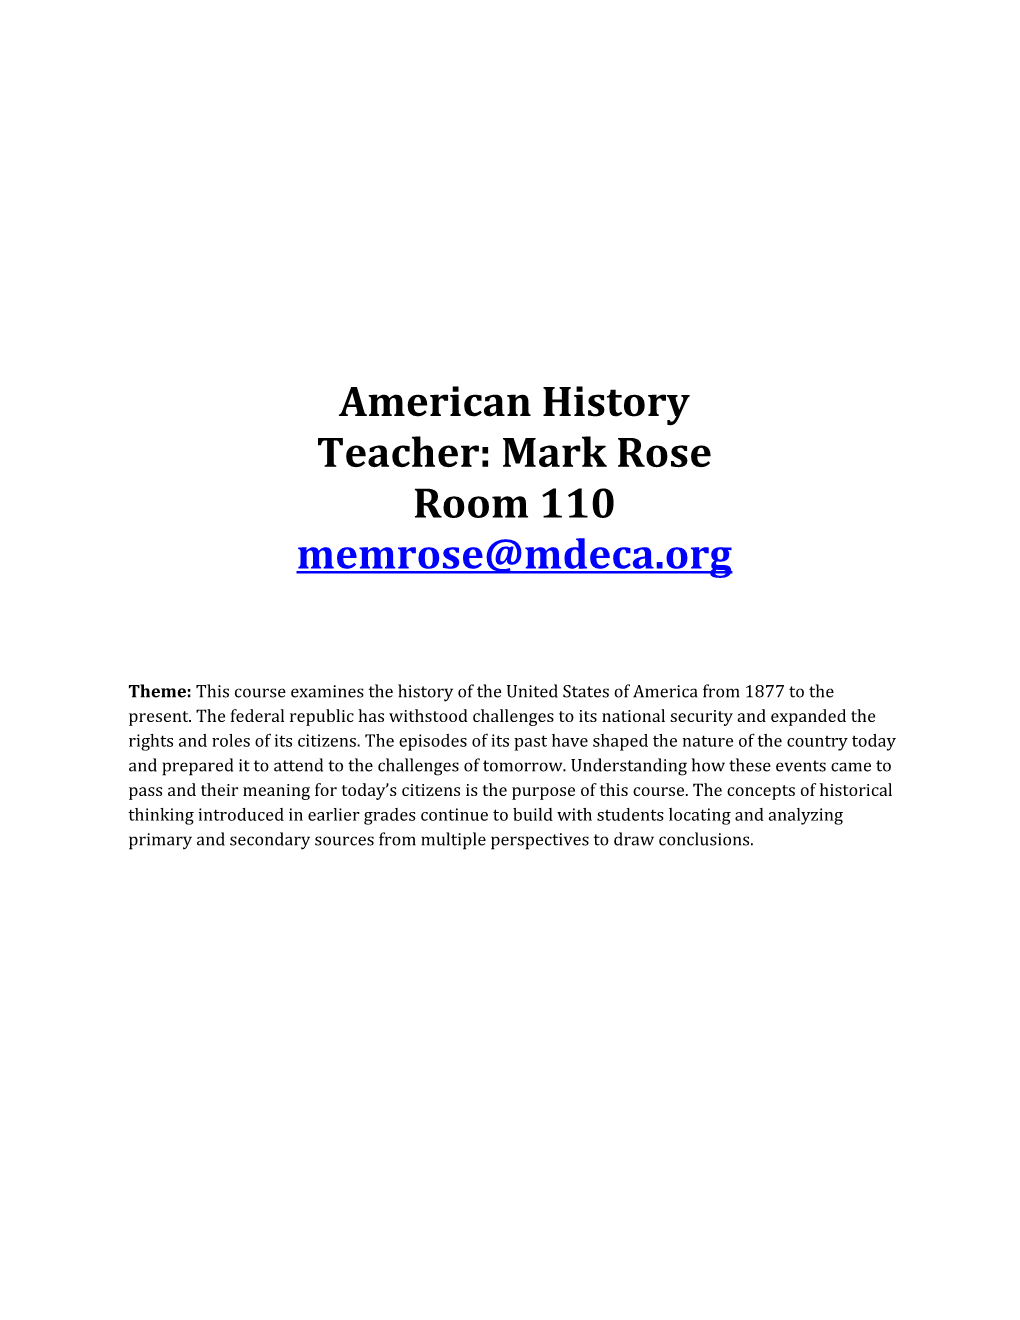 Topic: Historical Thinking and Skills